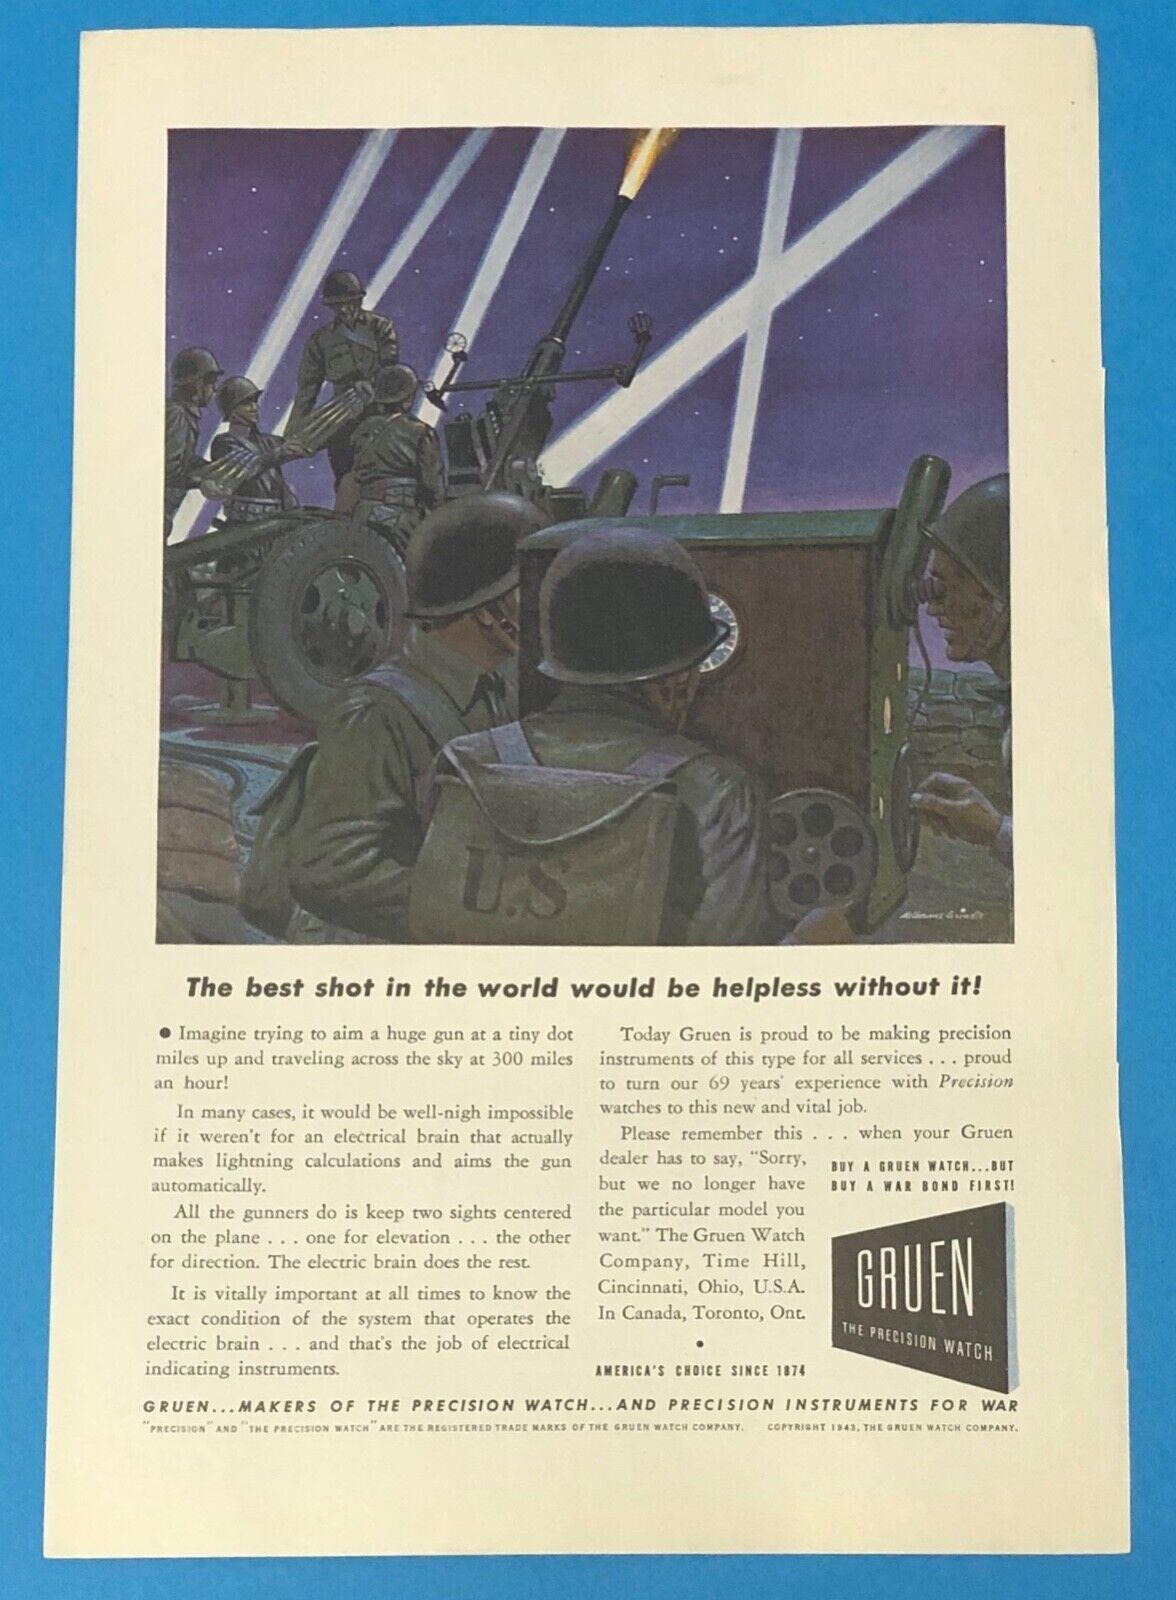 1943 Gruen Watch Company World War II era advertisement (size 6.5 x 10 in)